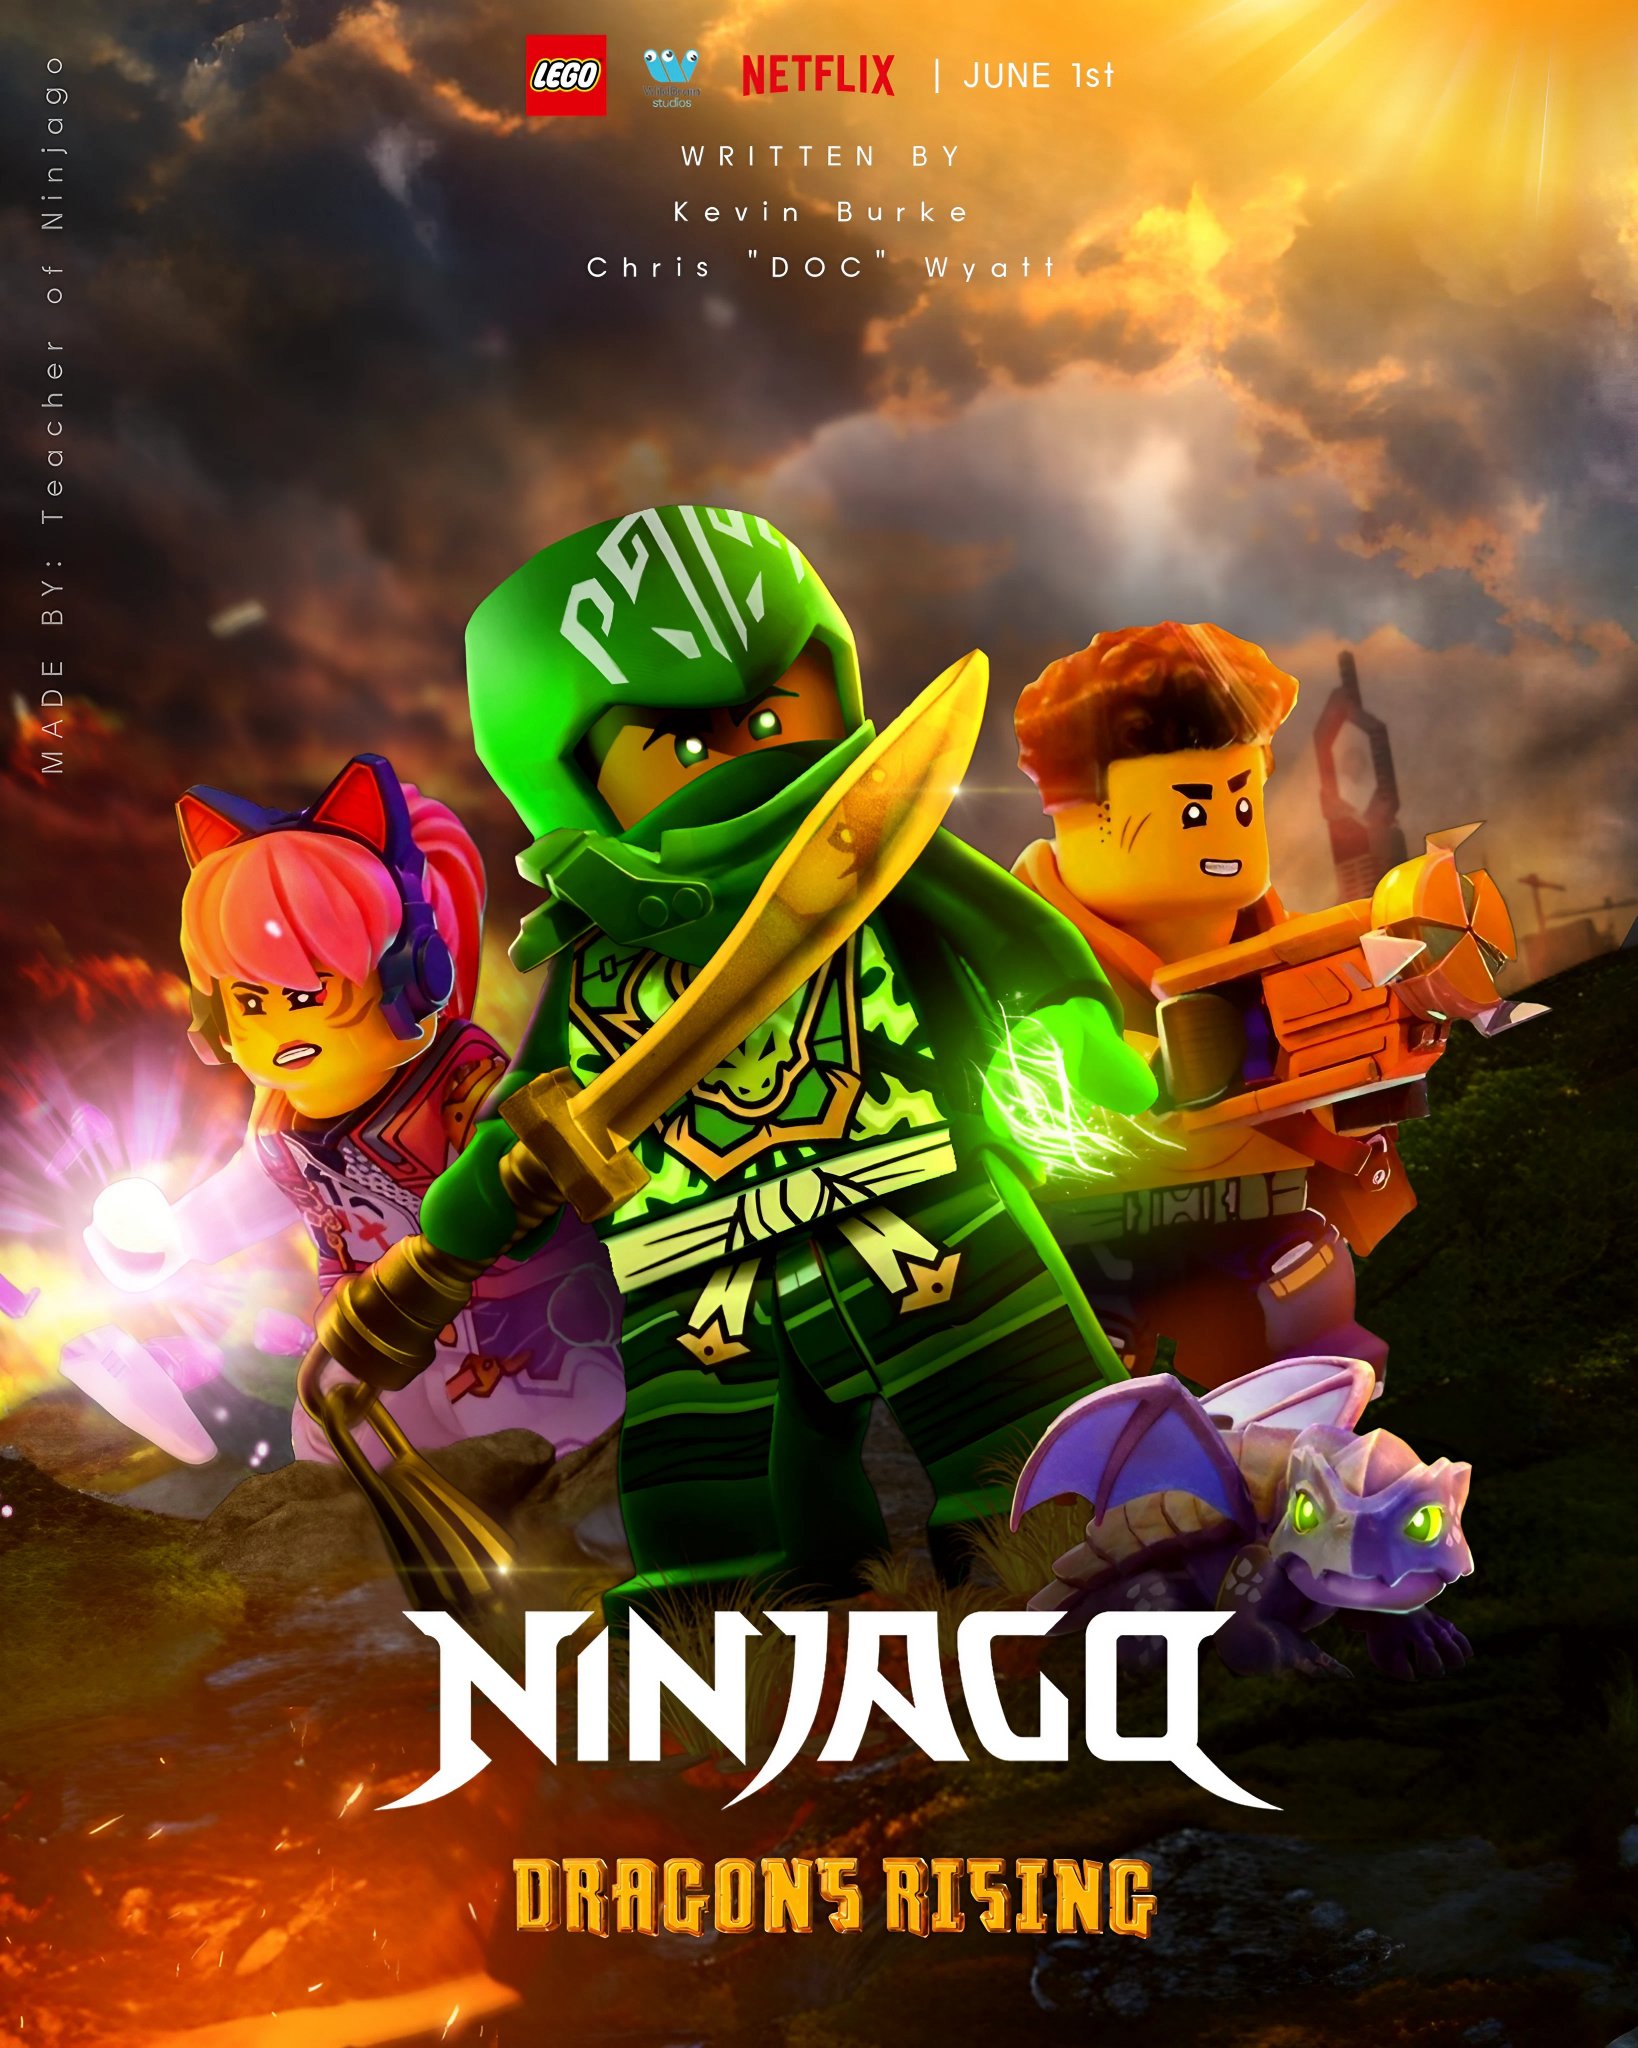 LEGO NINJAGO DRAGONS RISING POSTER MADE BY HAMADA NINJA